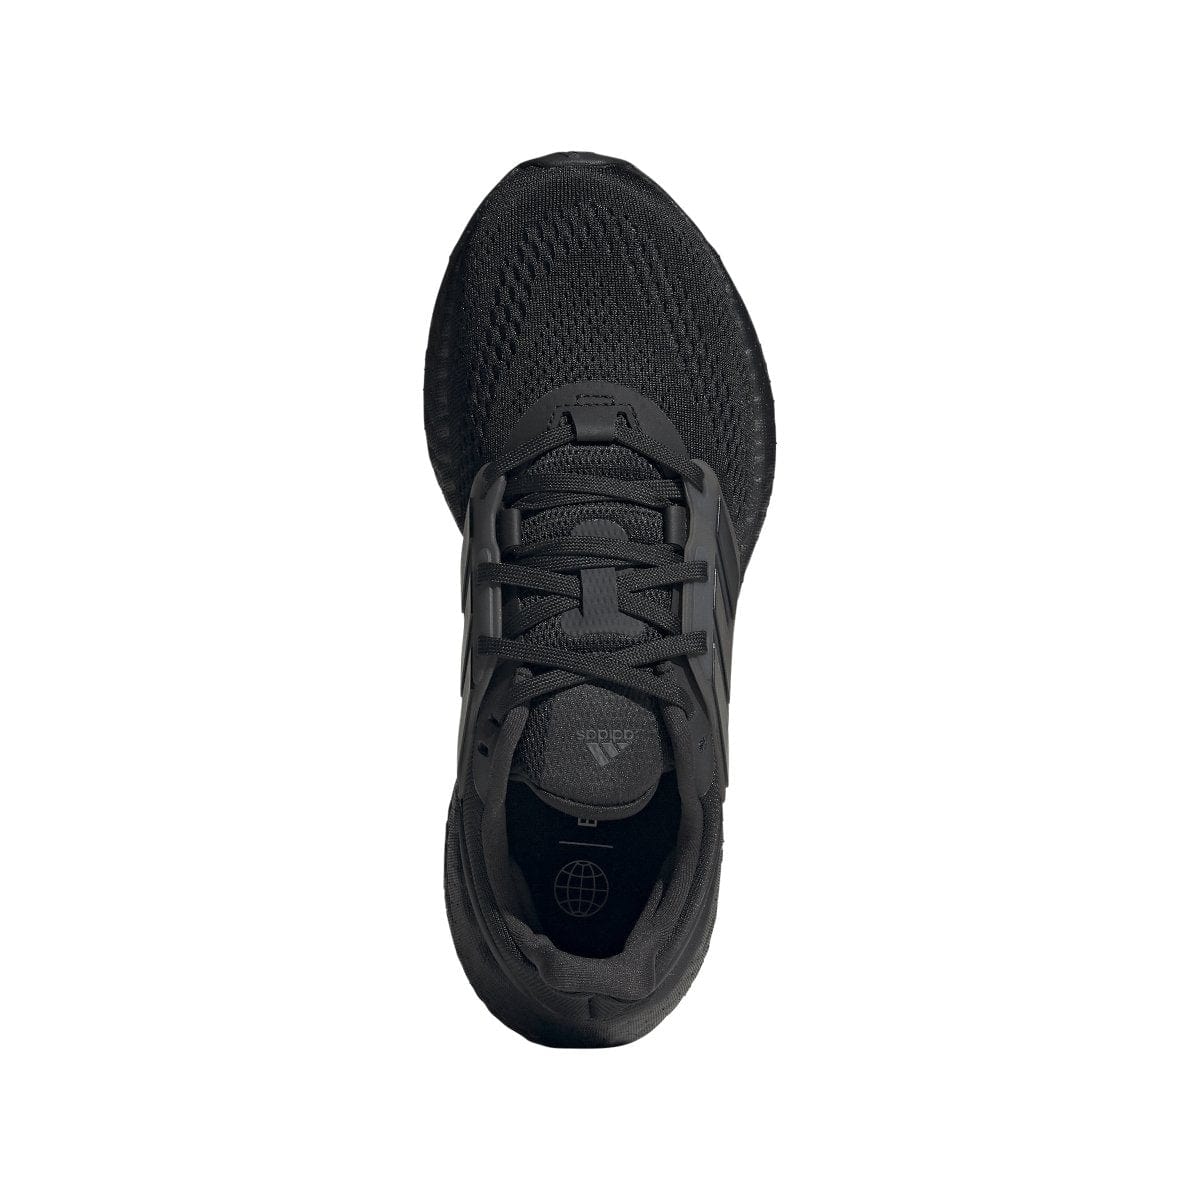 Adidas ADIDAS WOMEN'S PUREBOOST 22 TRIPLE BLACK RUNNING SHOES - INSPORT